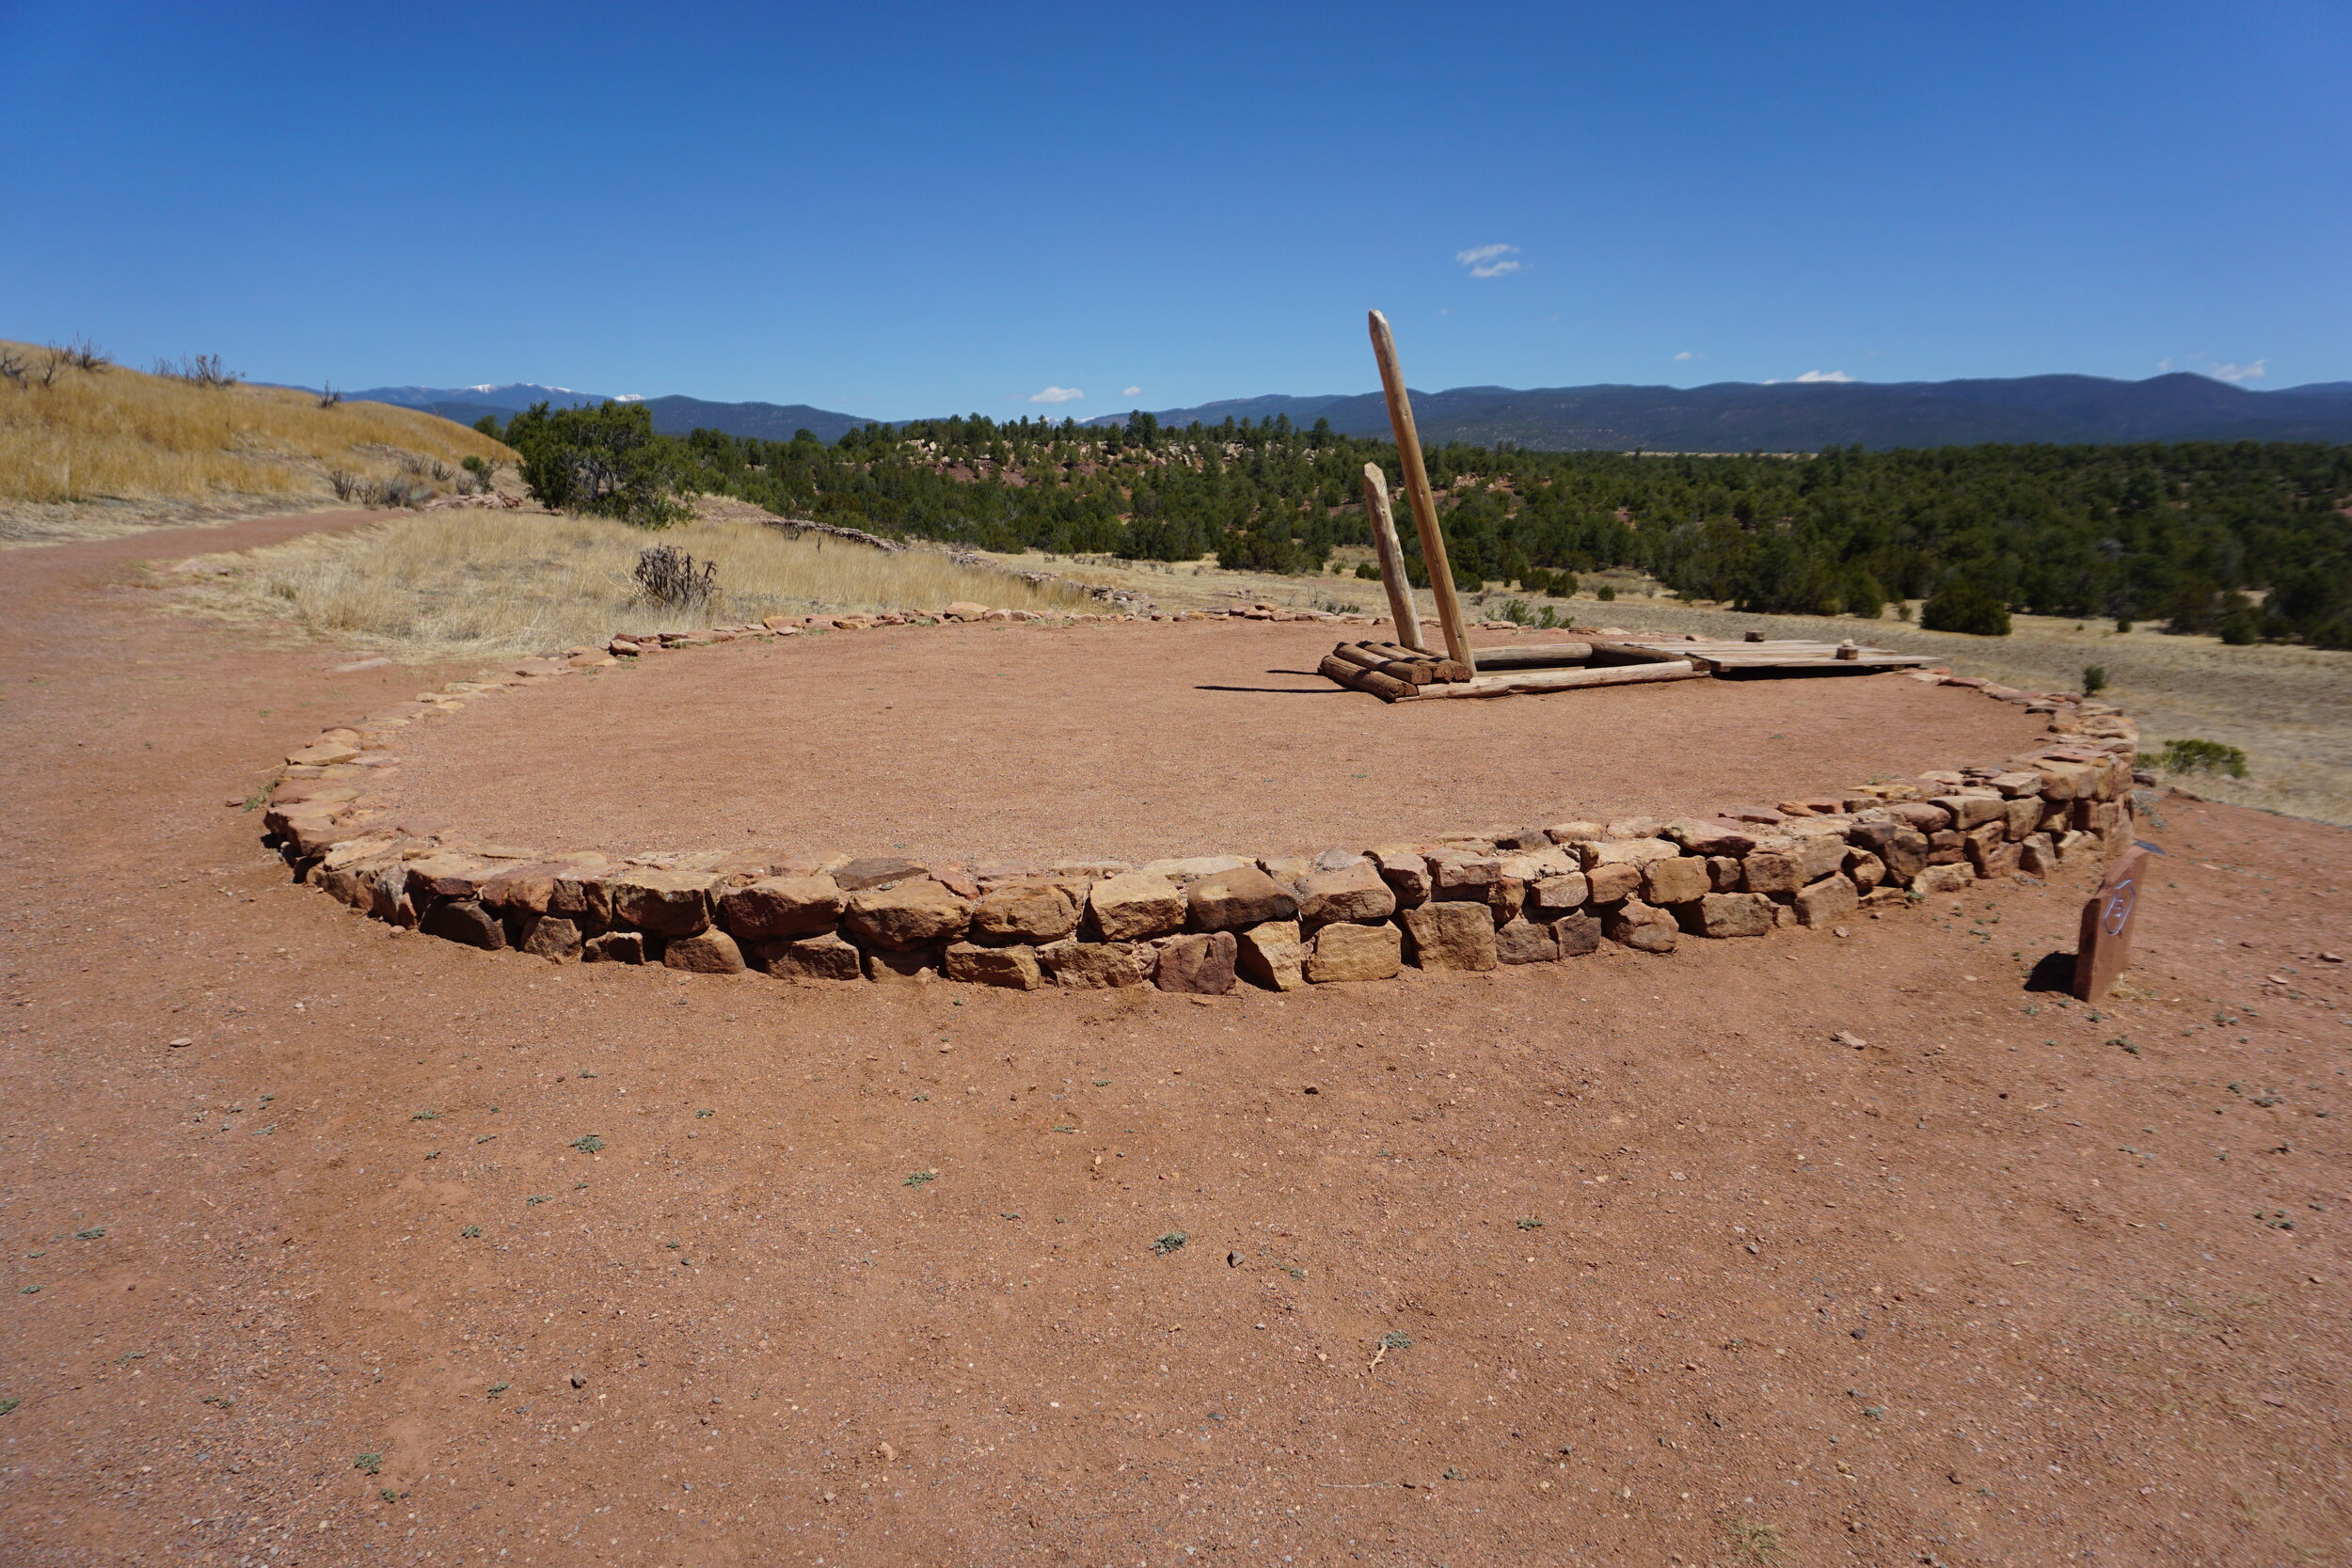 Kiva at Pecos National Historical Park